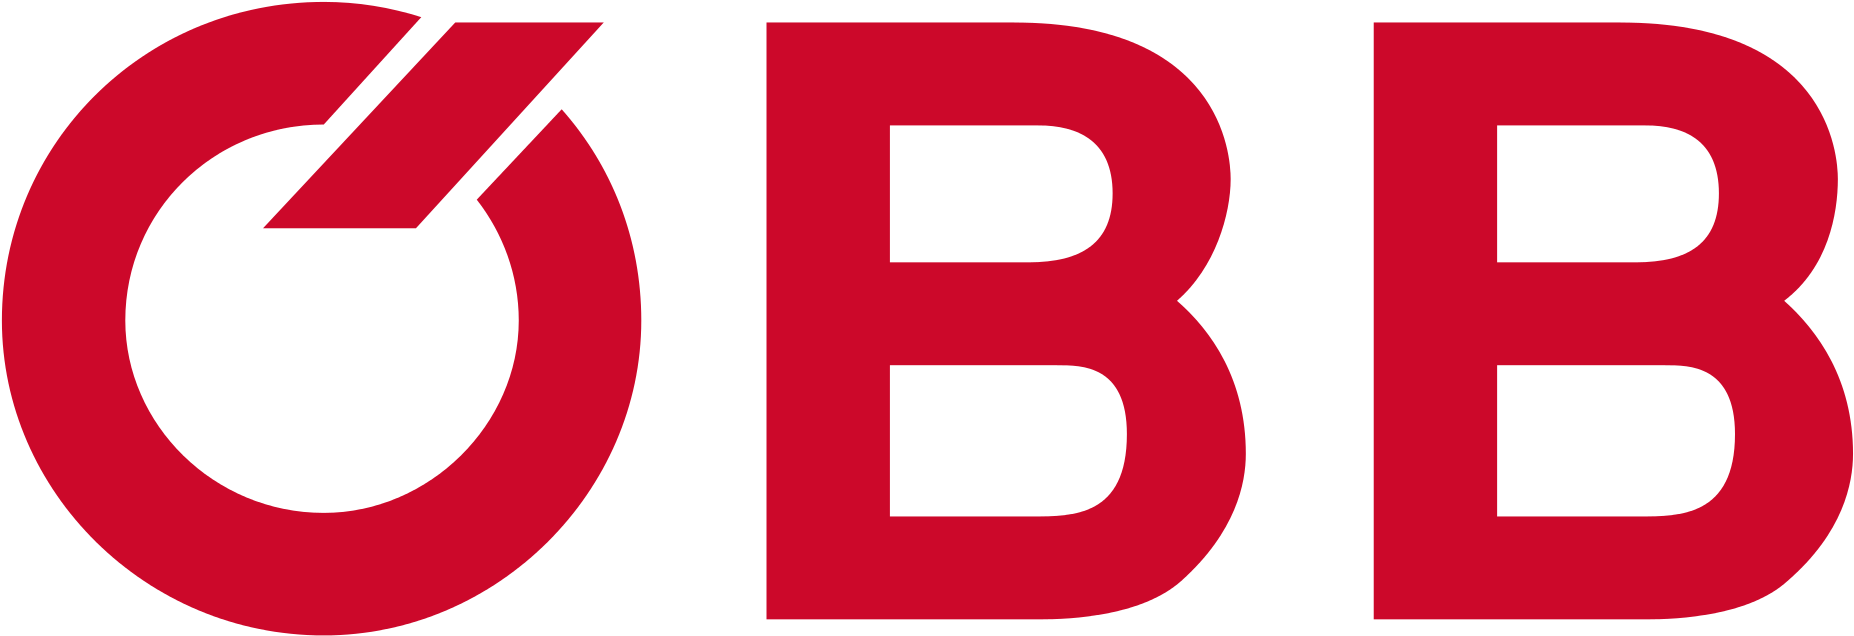 File Logo Bb Svg Wikimedia Commons Rh Commons Wikimedia - Öbb Firmenlogo (2000x671), Png Download